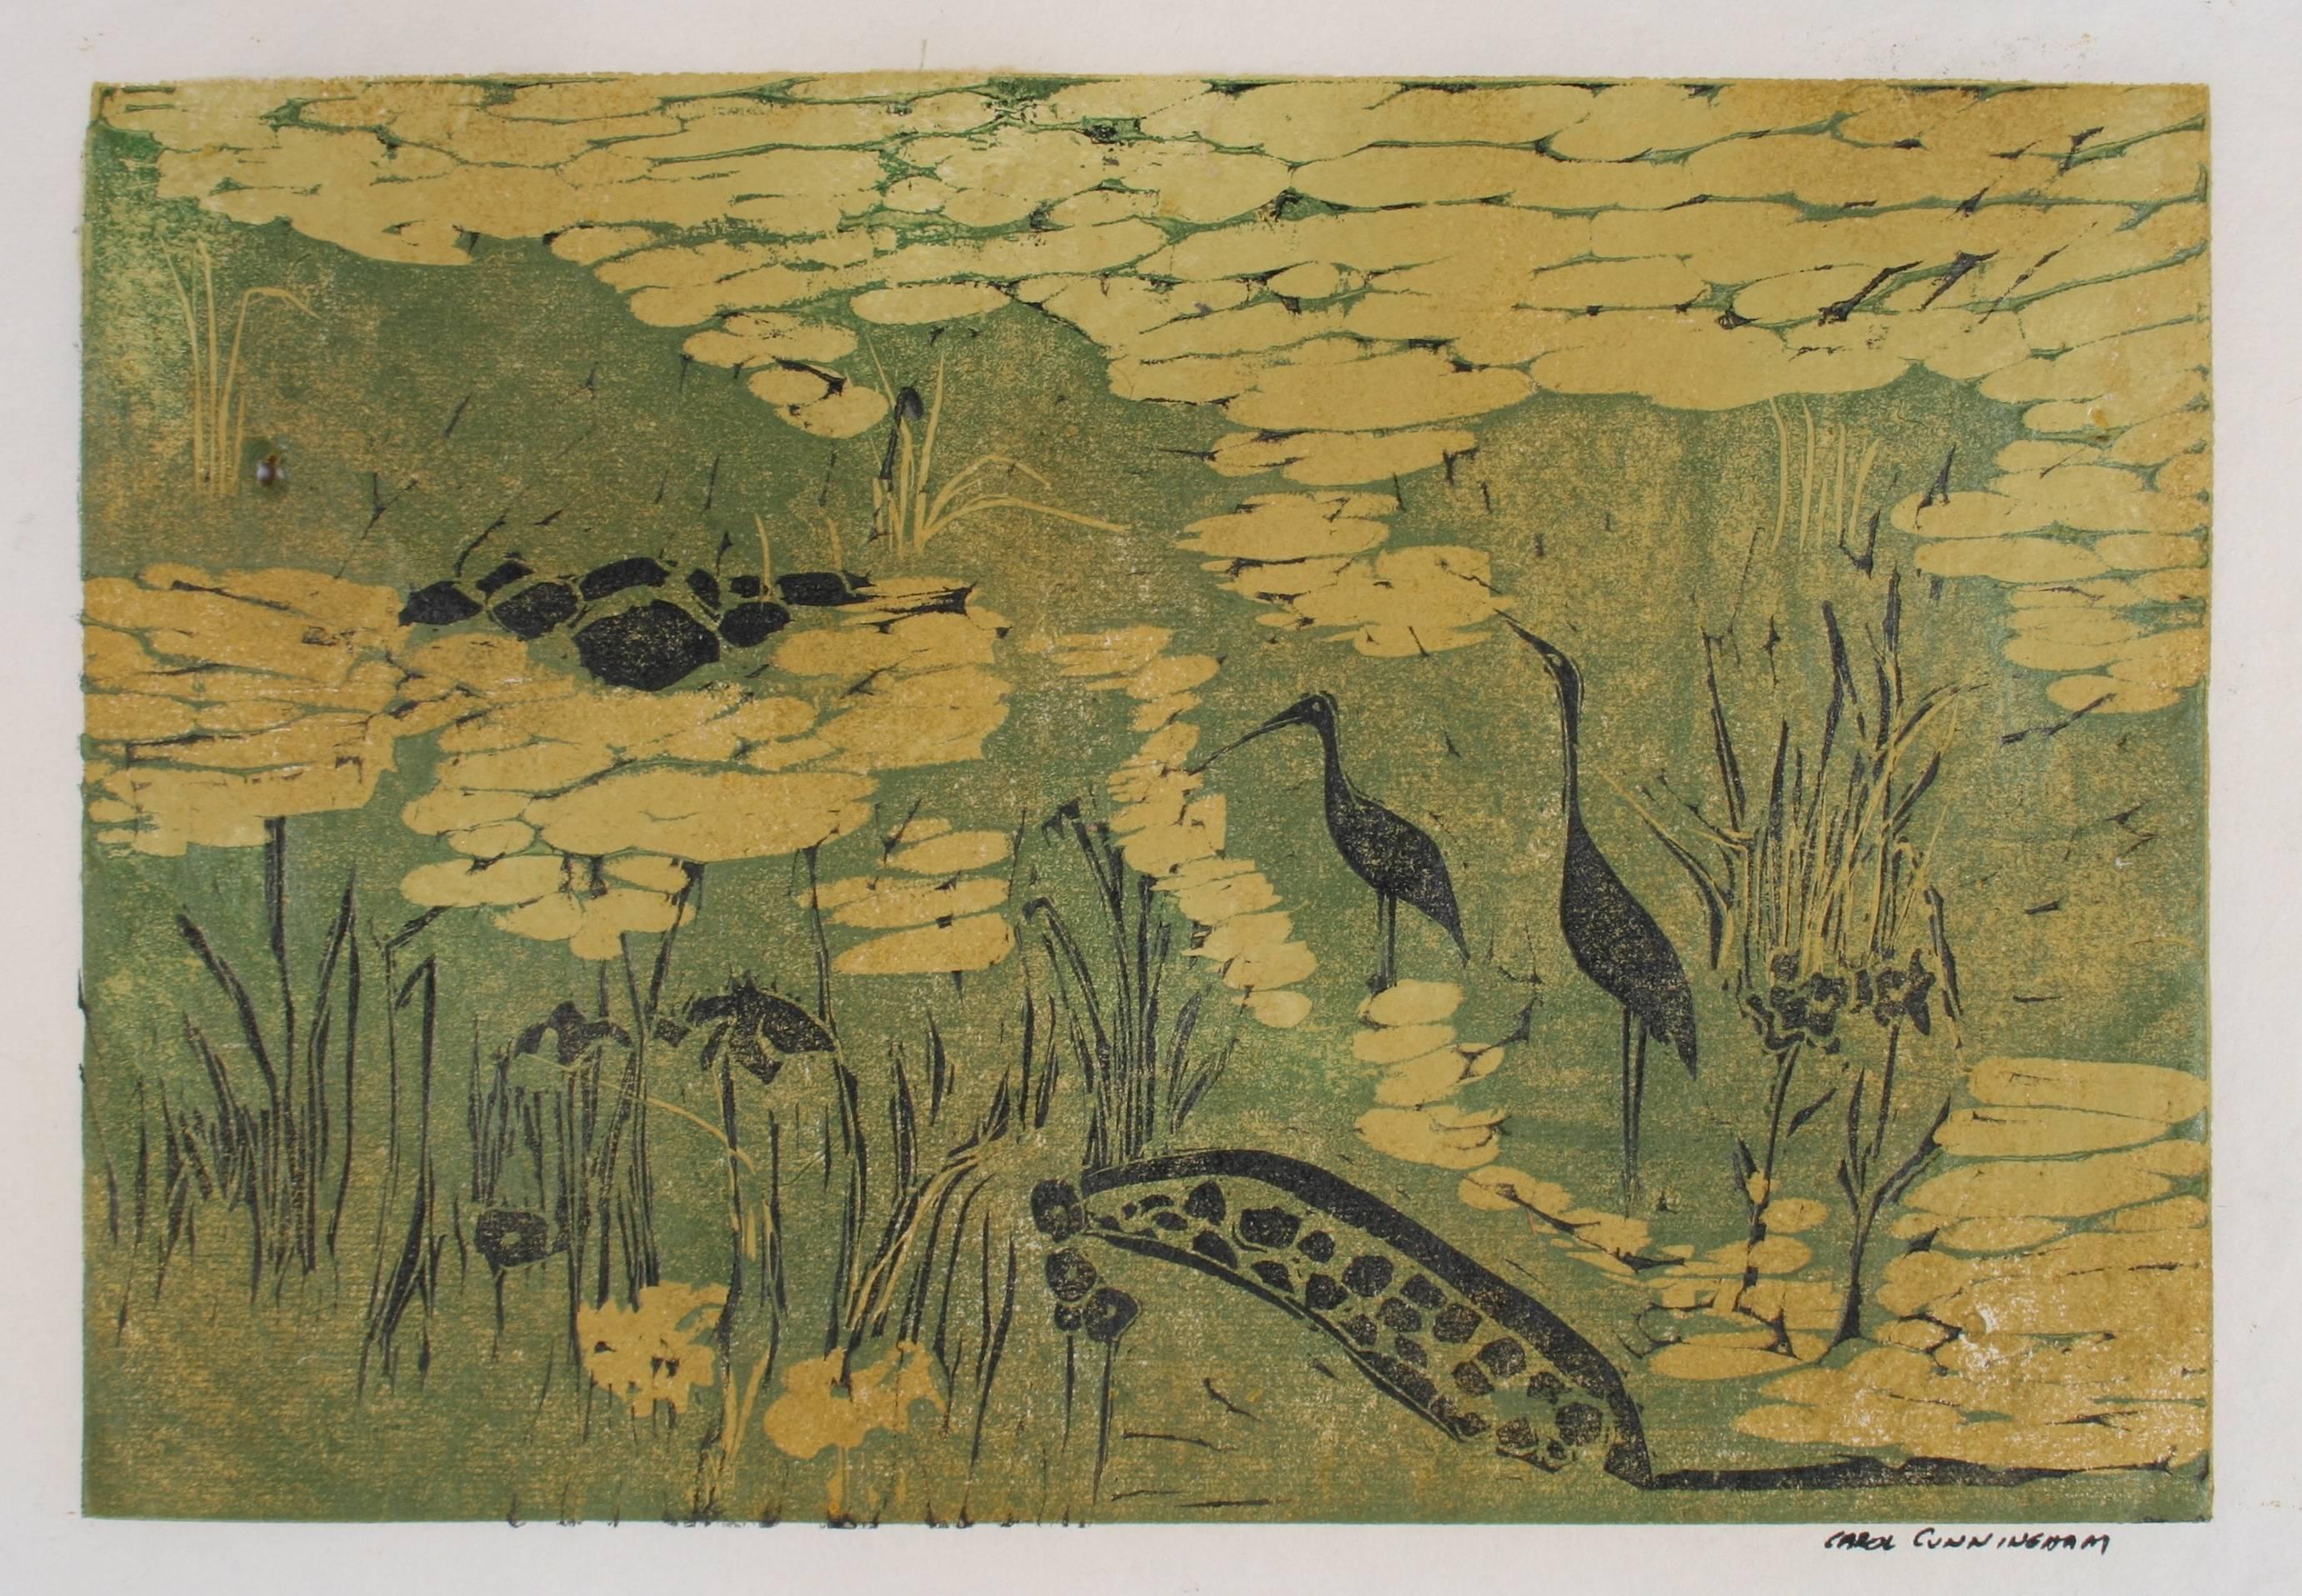 This 1960-1970s linoleum block print on paper aquatic landscape entitled 